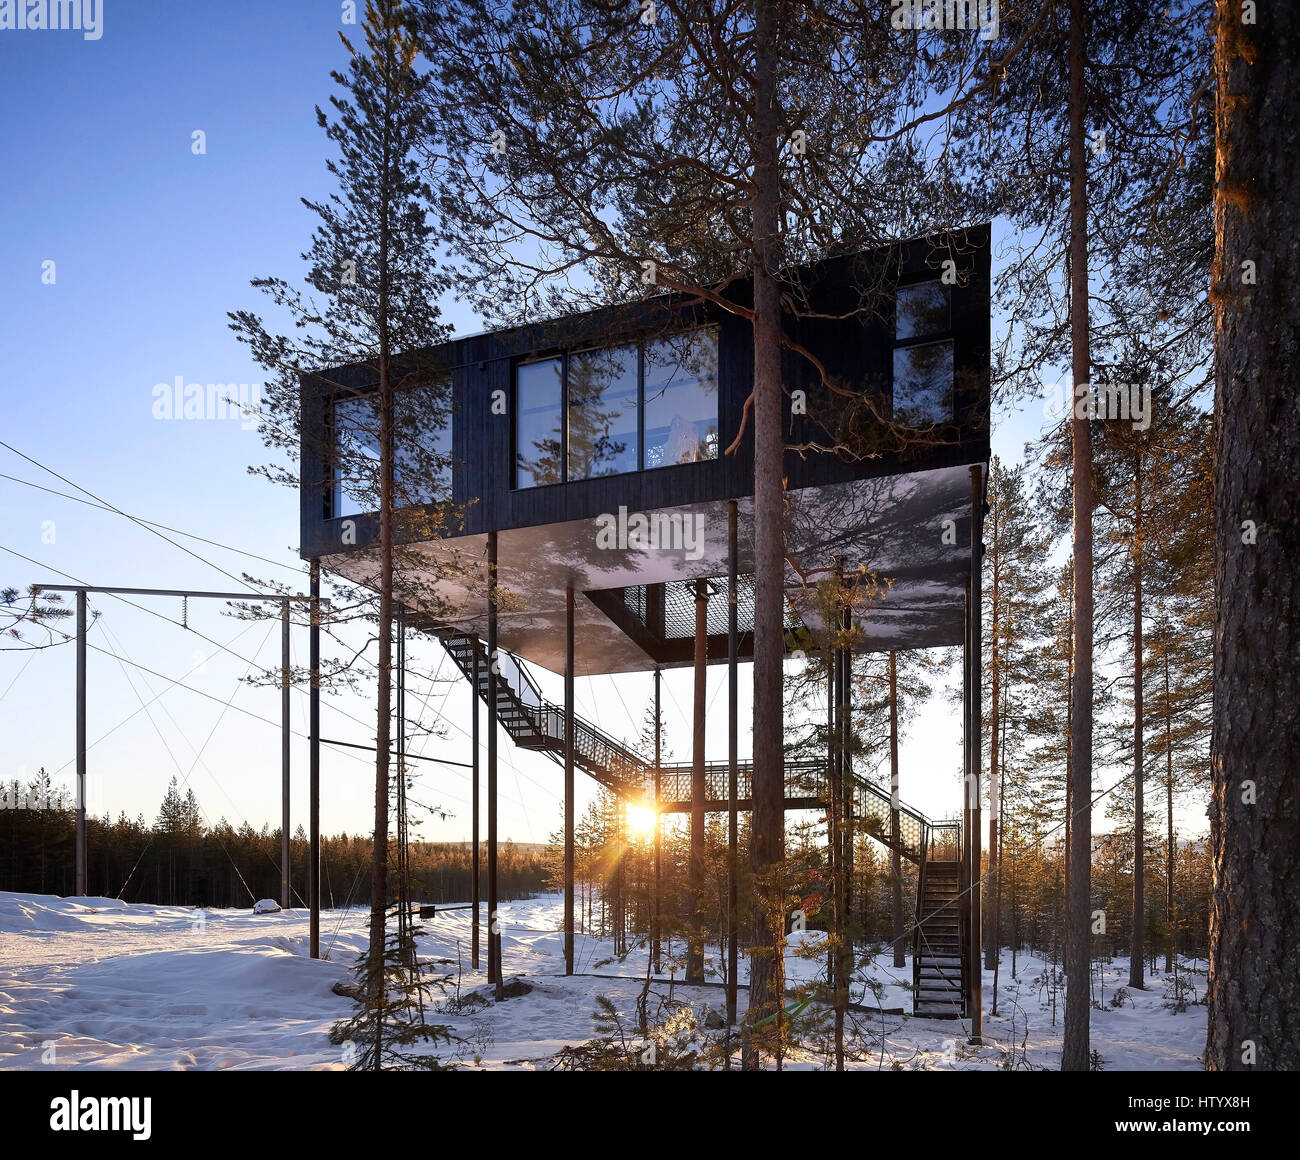 La camera 7. Treehotel, Harads, Svezia. Architetto: vari, 2016. Foto Stock